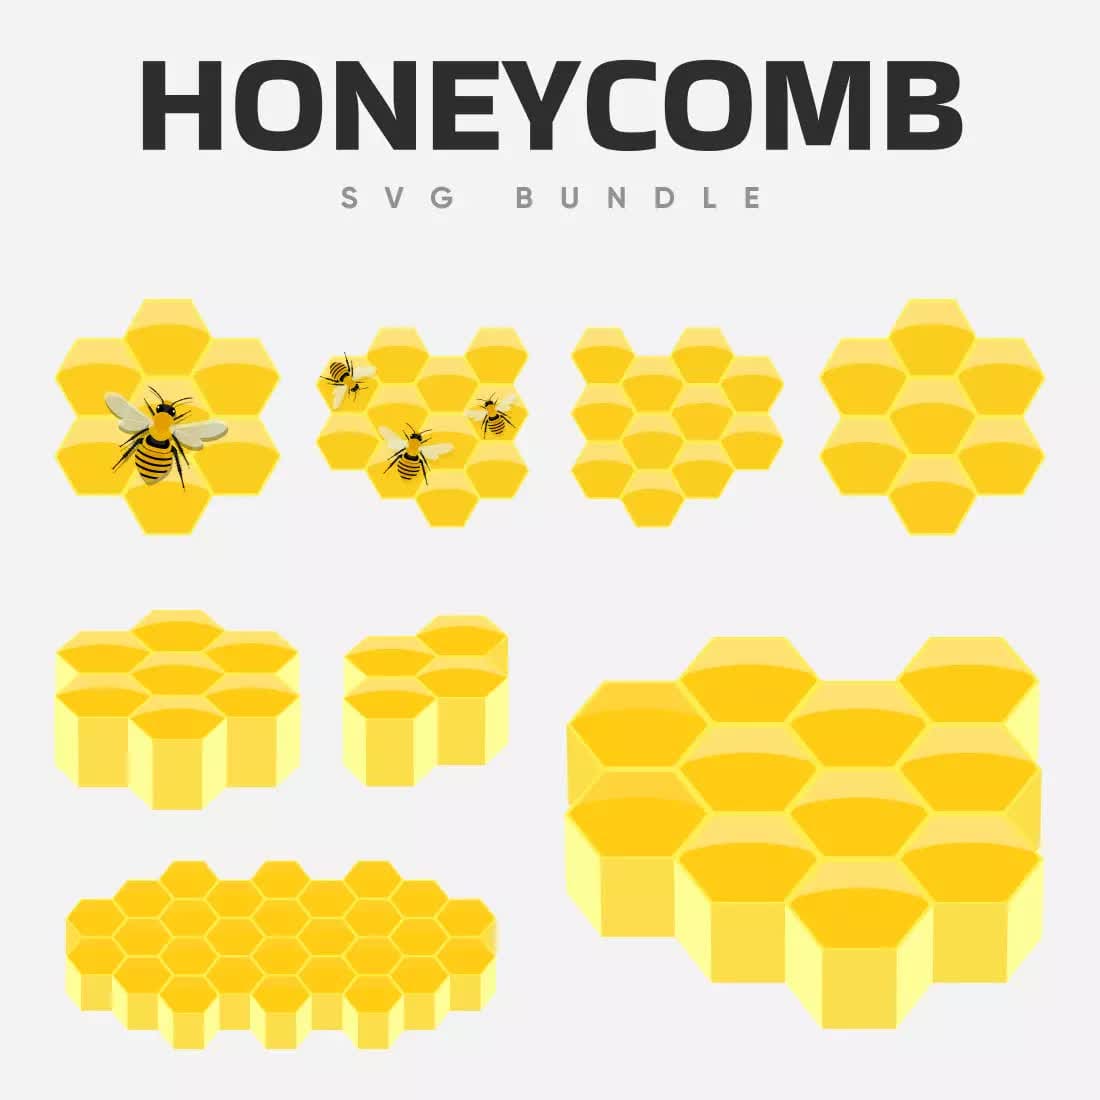 Honeycomb SVG Bundle Preview 2.